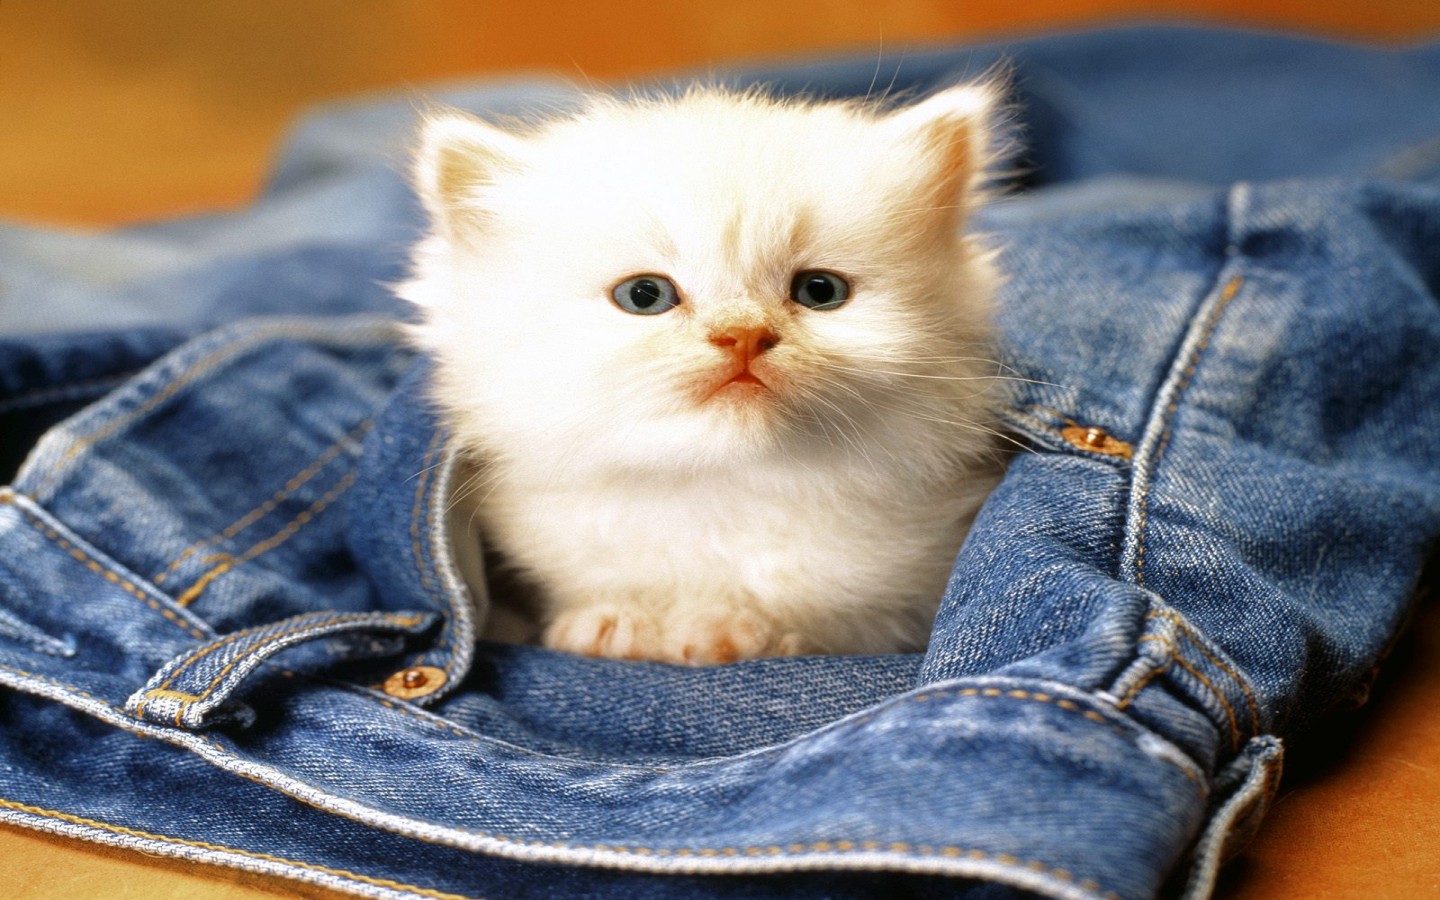 Sweet cat sitting in jeans